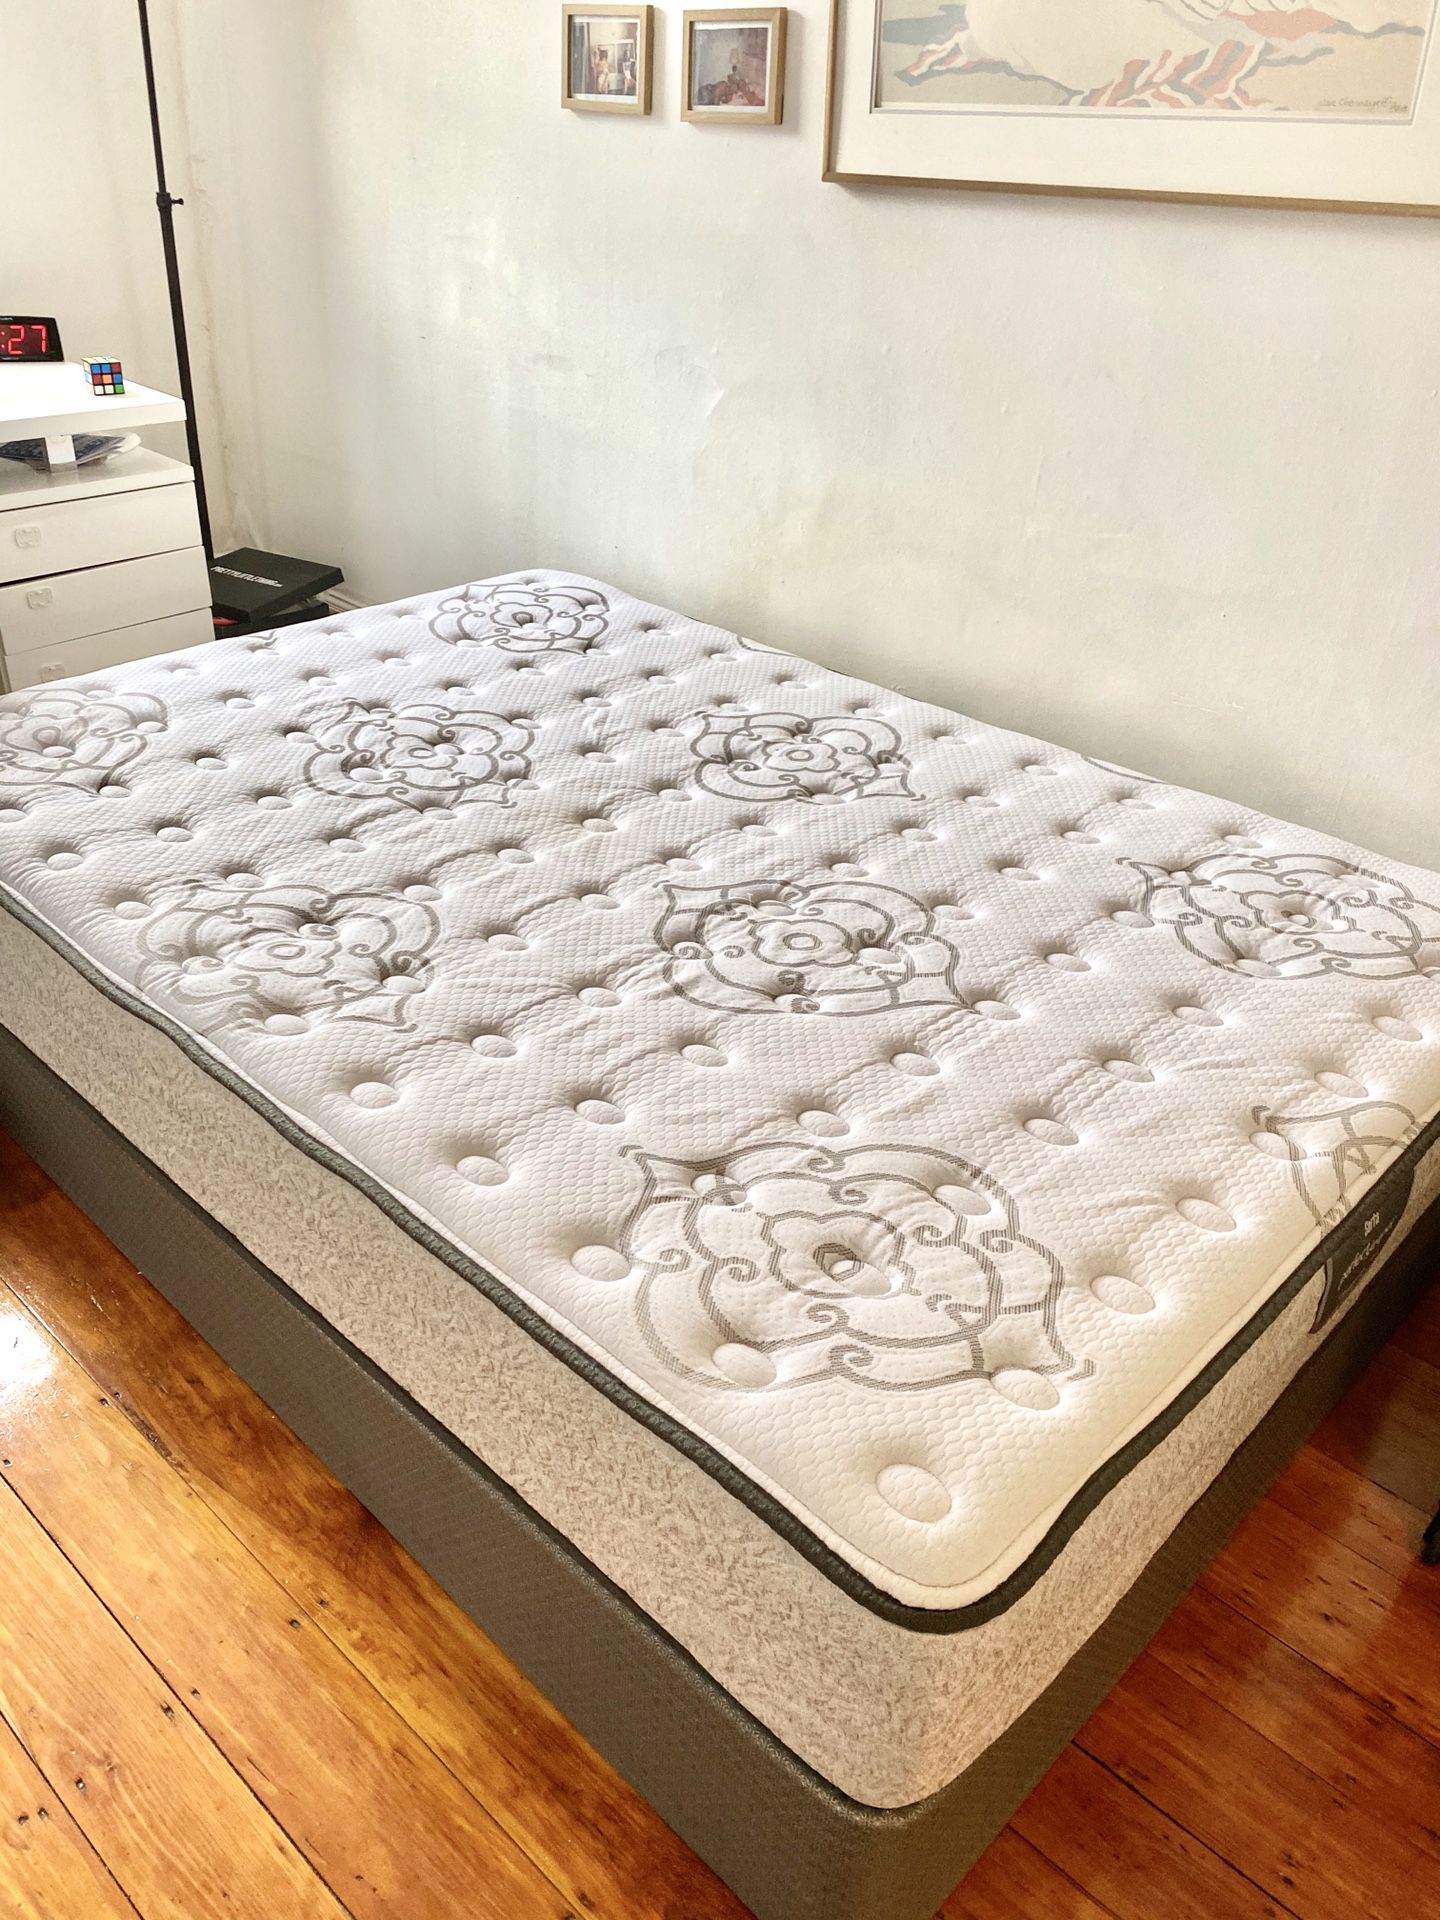 Serta mattress and box spring! (full size)